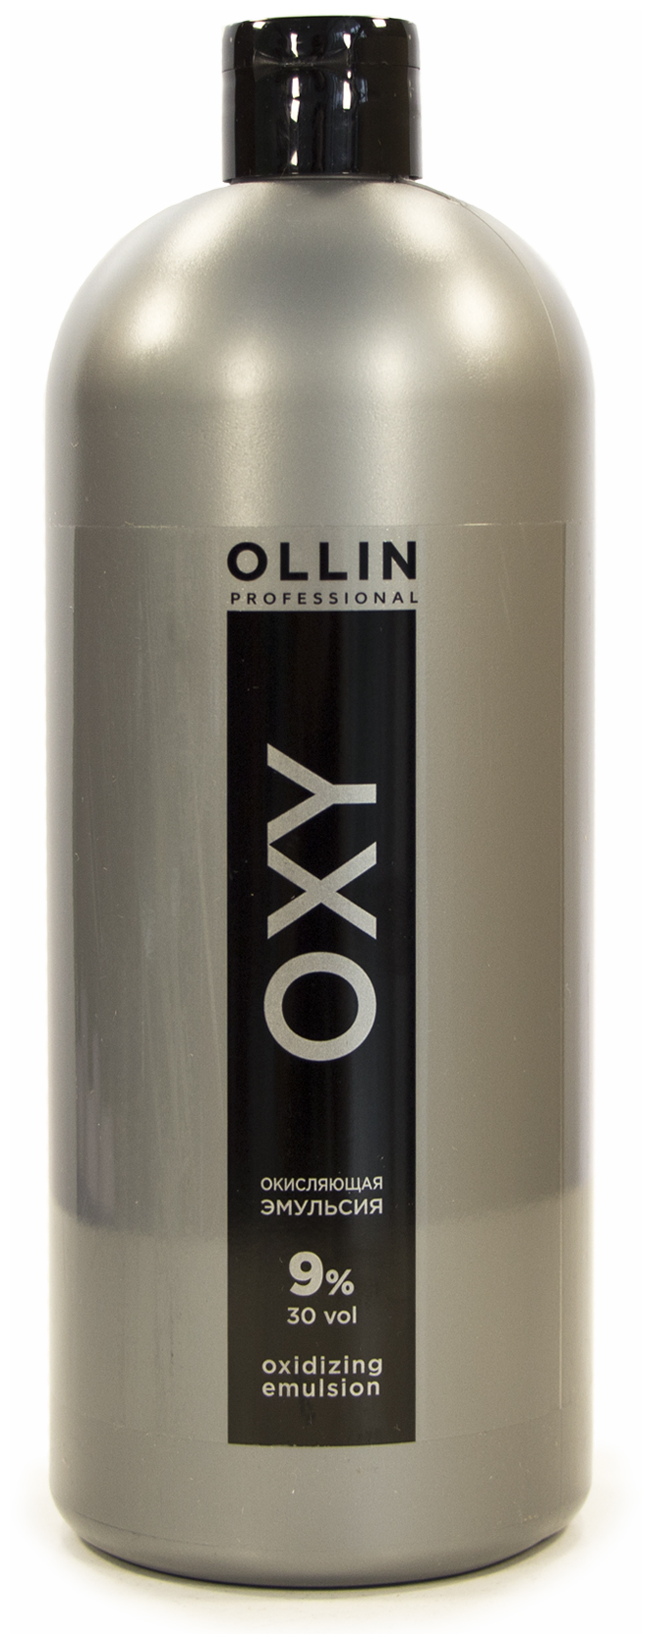 OLLIN Professional Окисляющая эмульсия Oxy, 9%, 1000 мл.